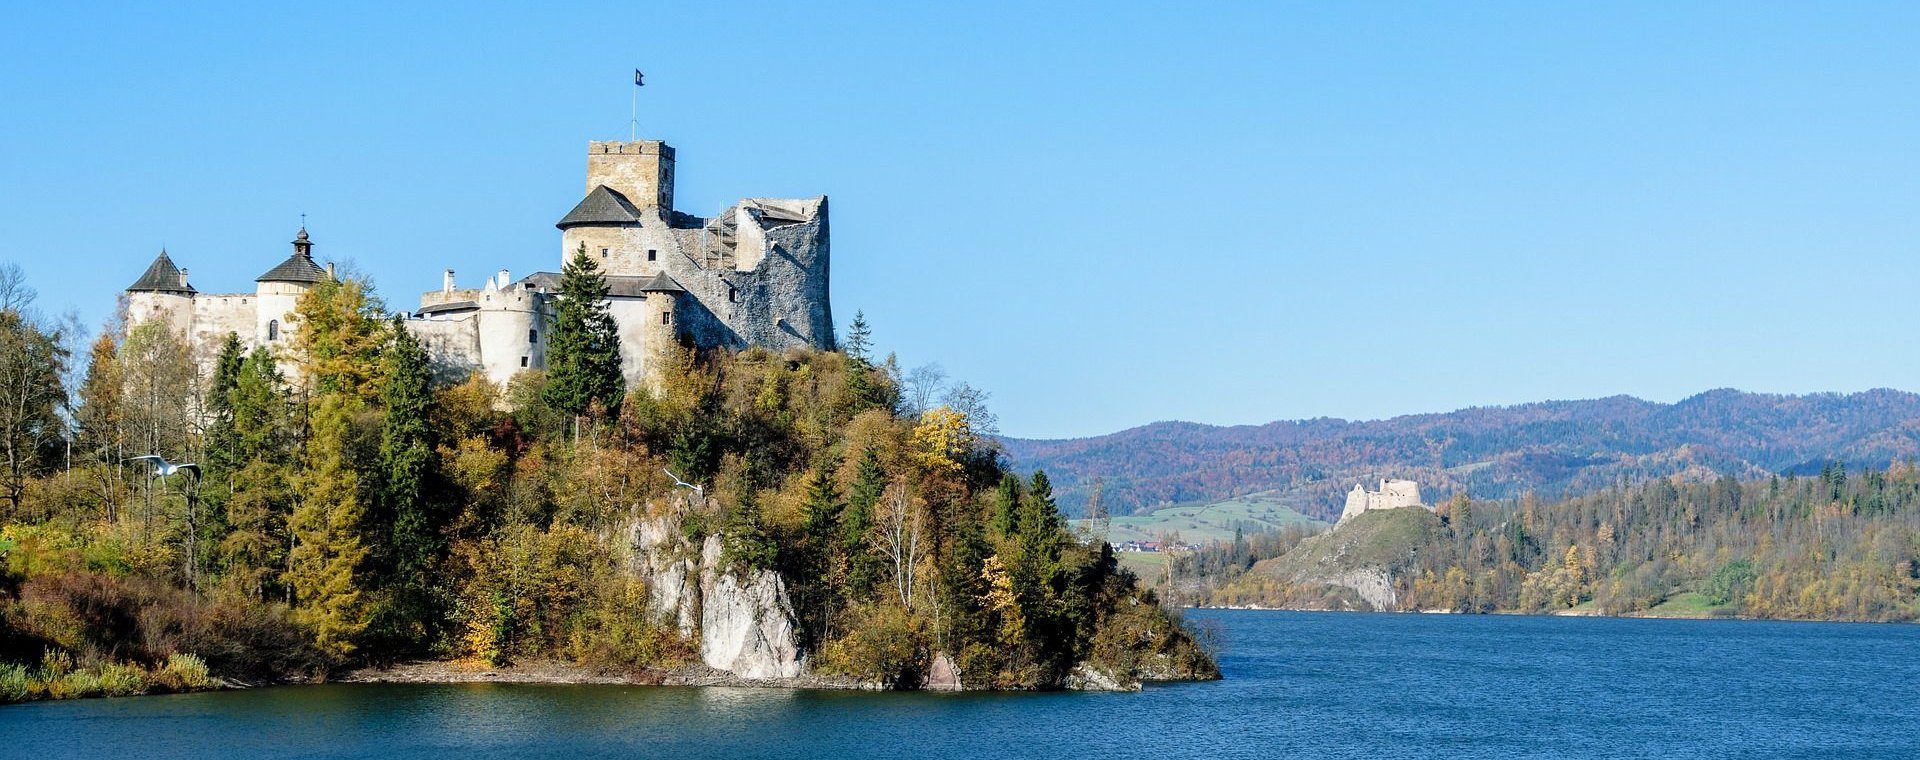 Zamki nad Dunajcem